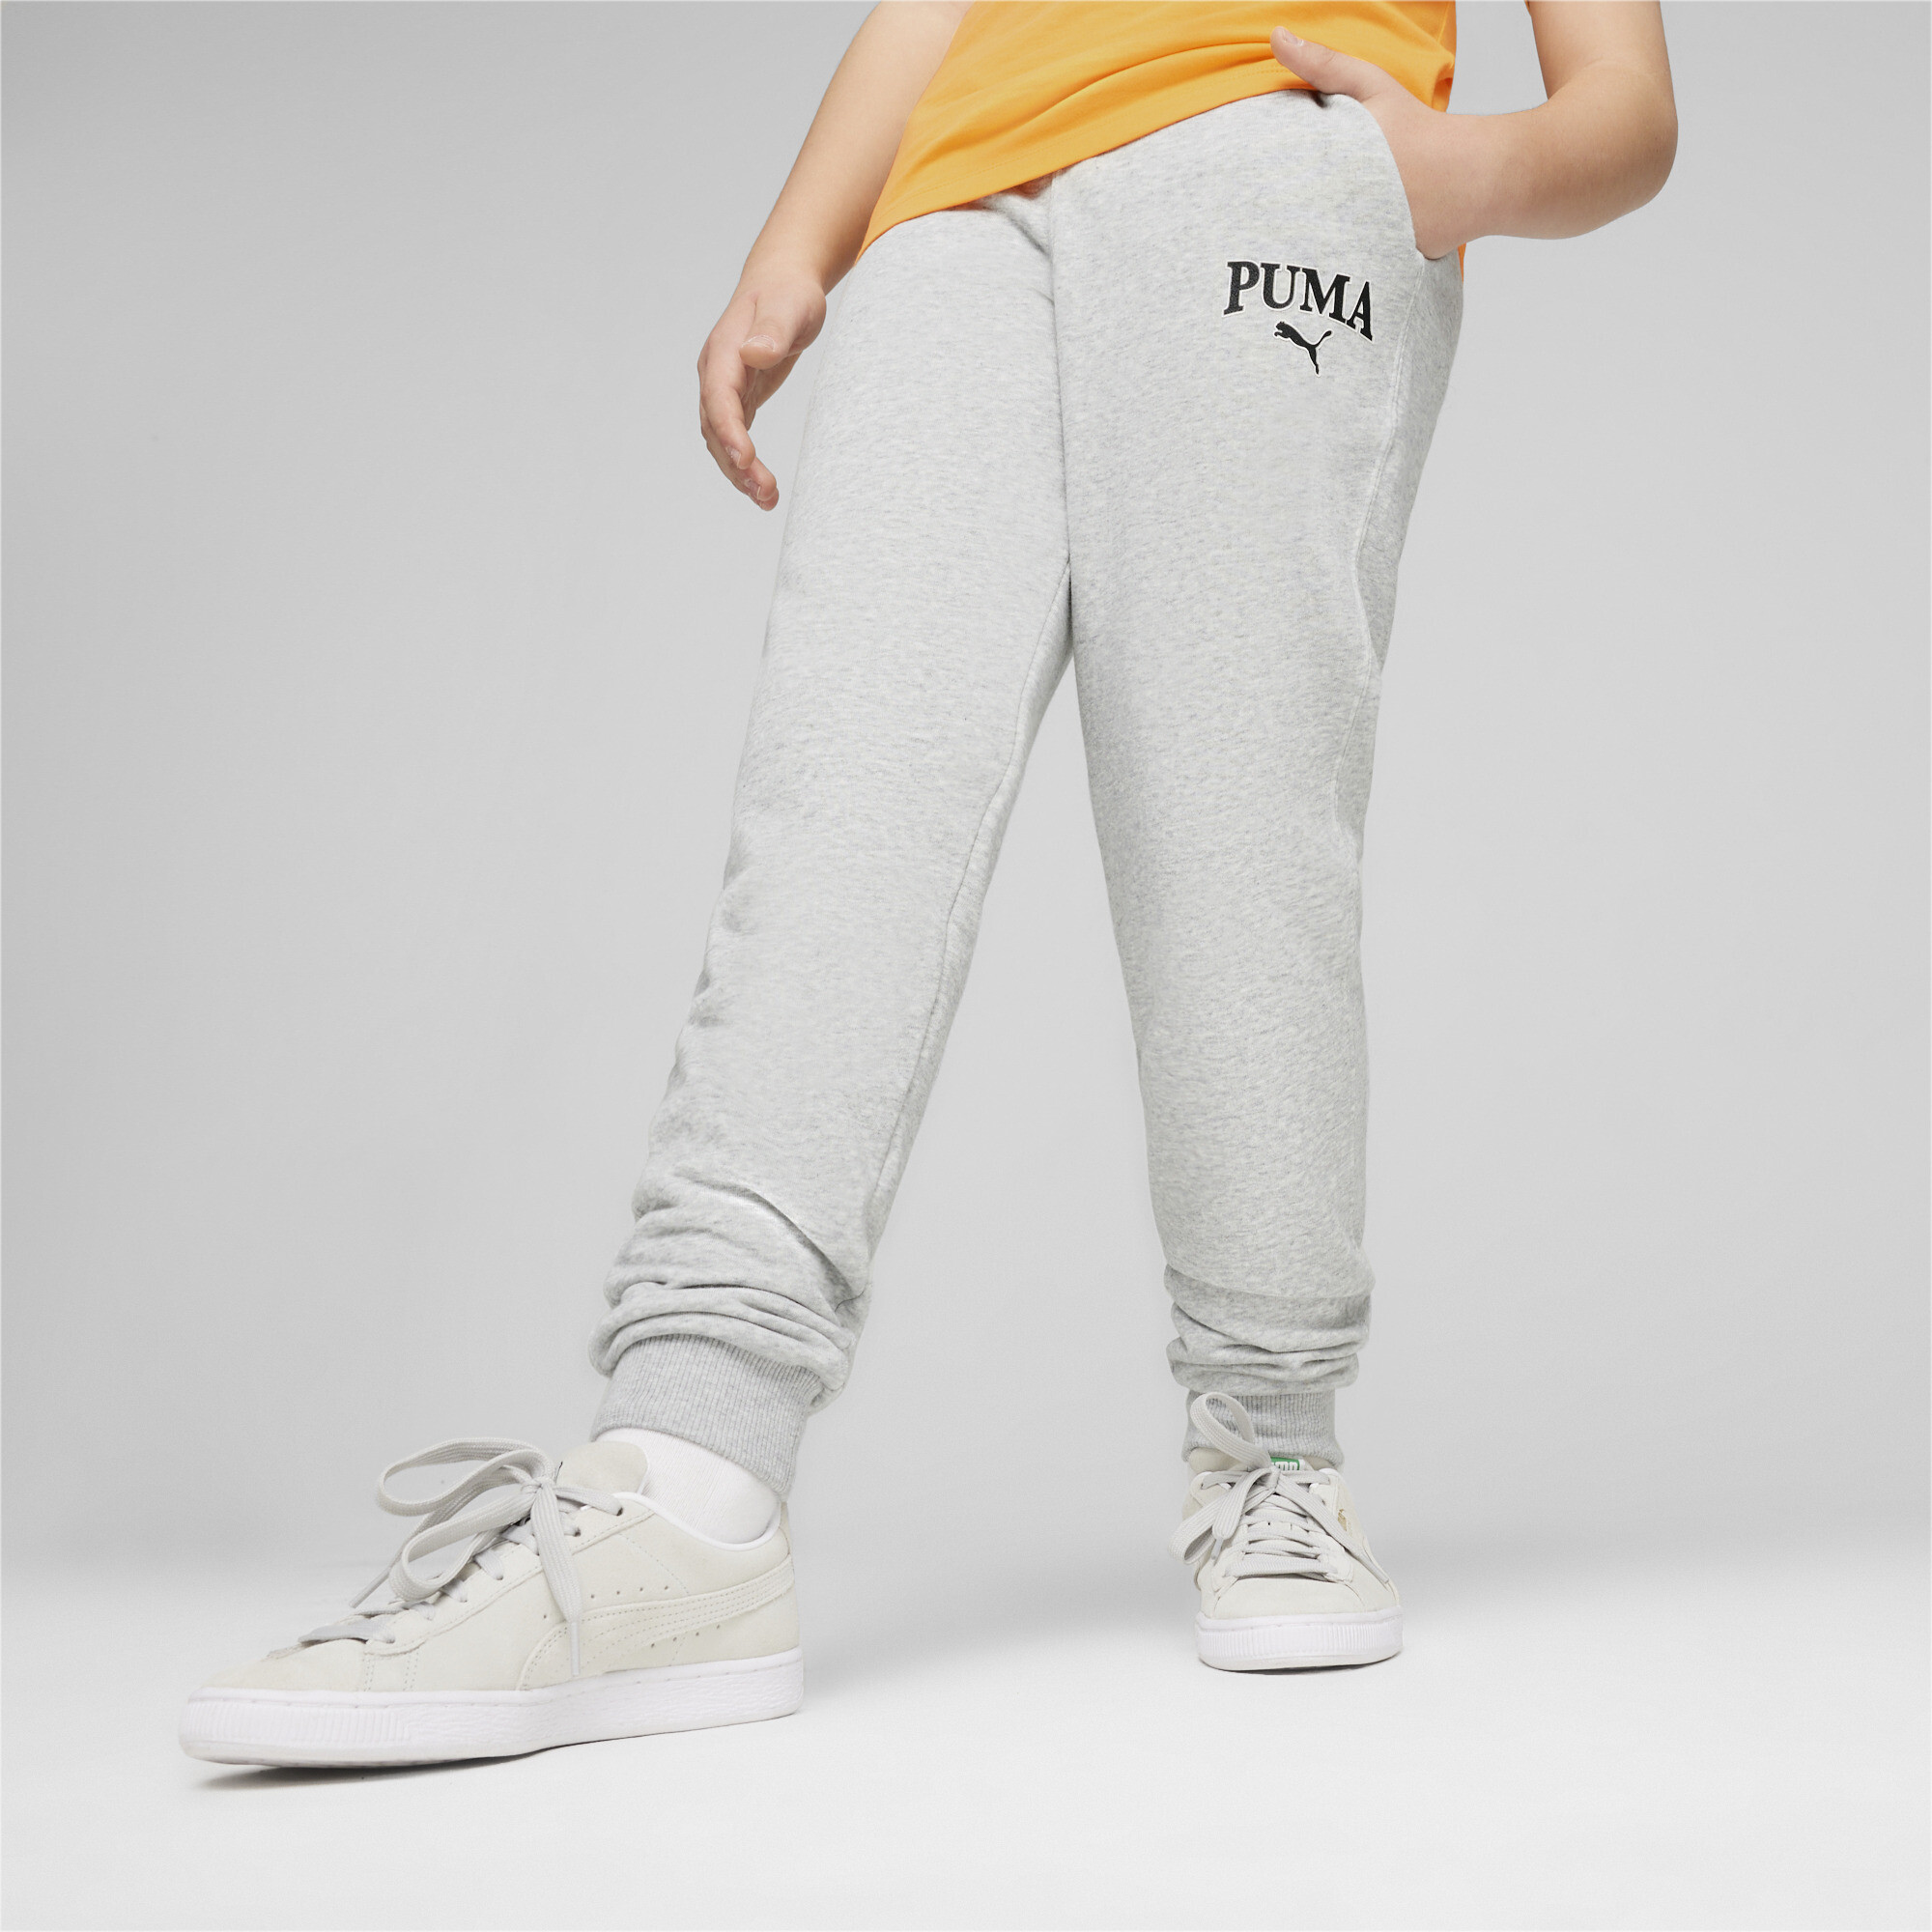 Men's Puma SQUAD Youth Sweatpants, Gray, Size 11-12Y, Age